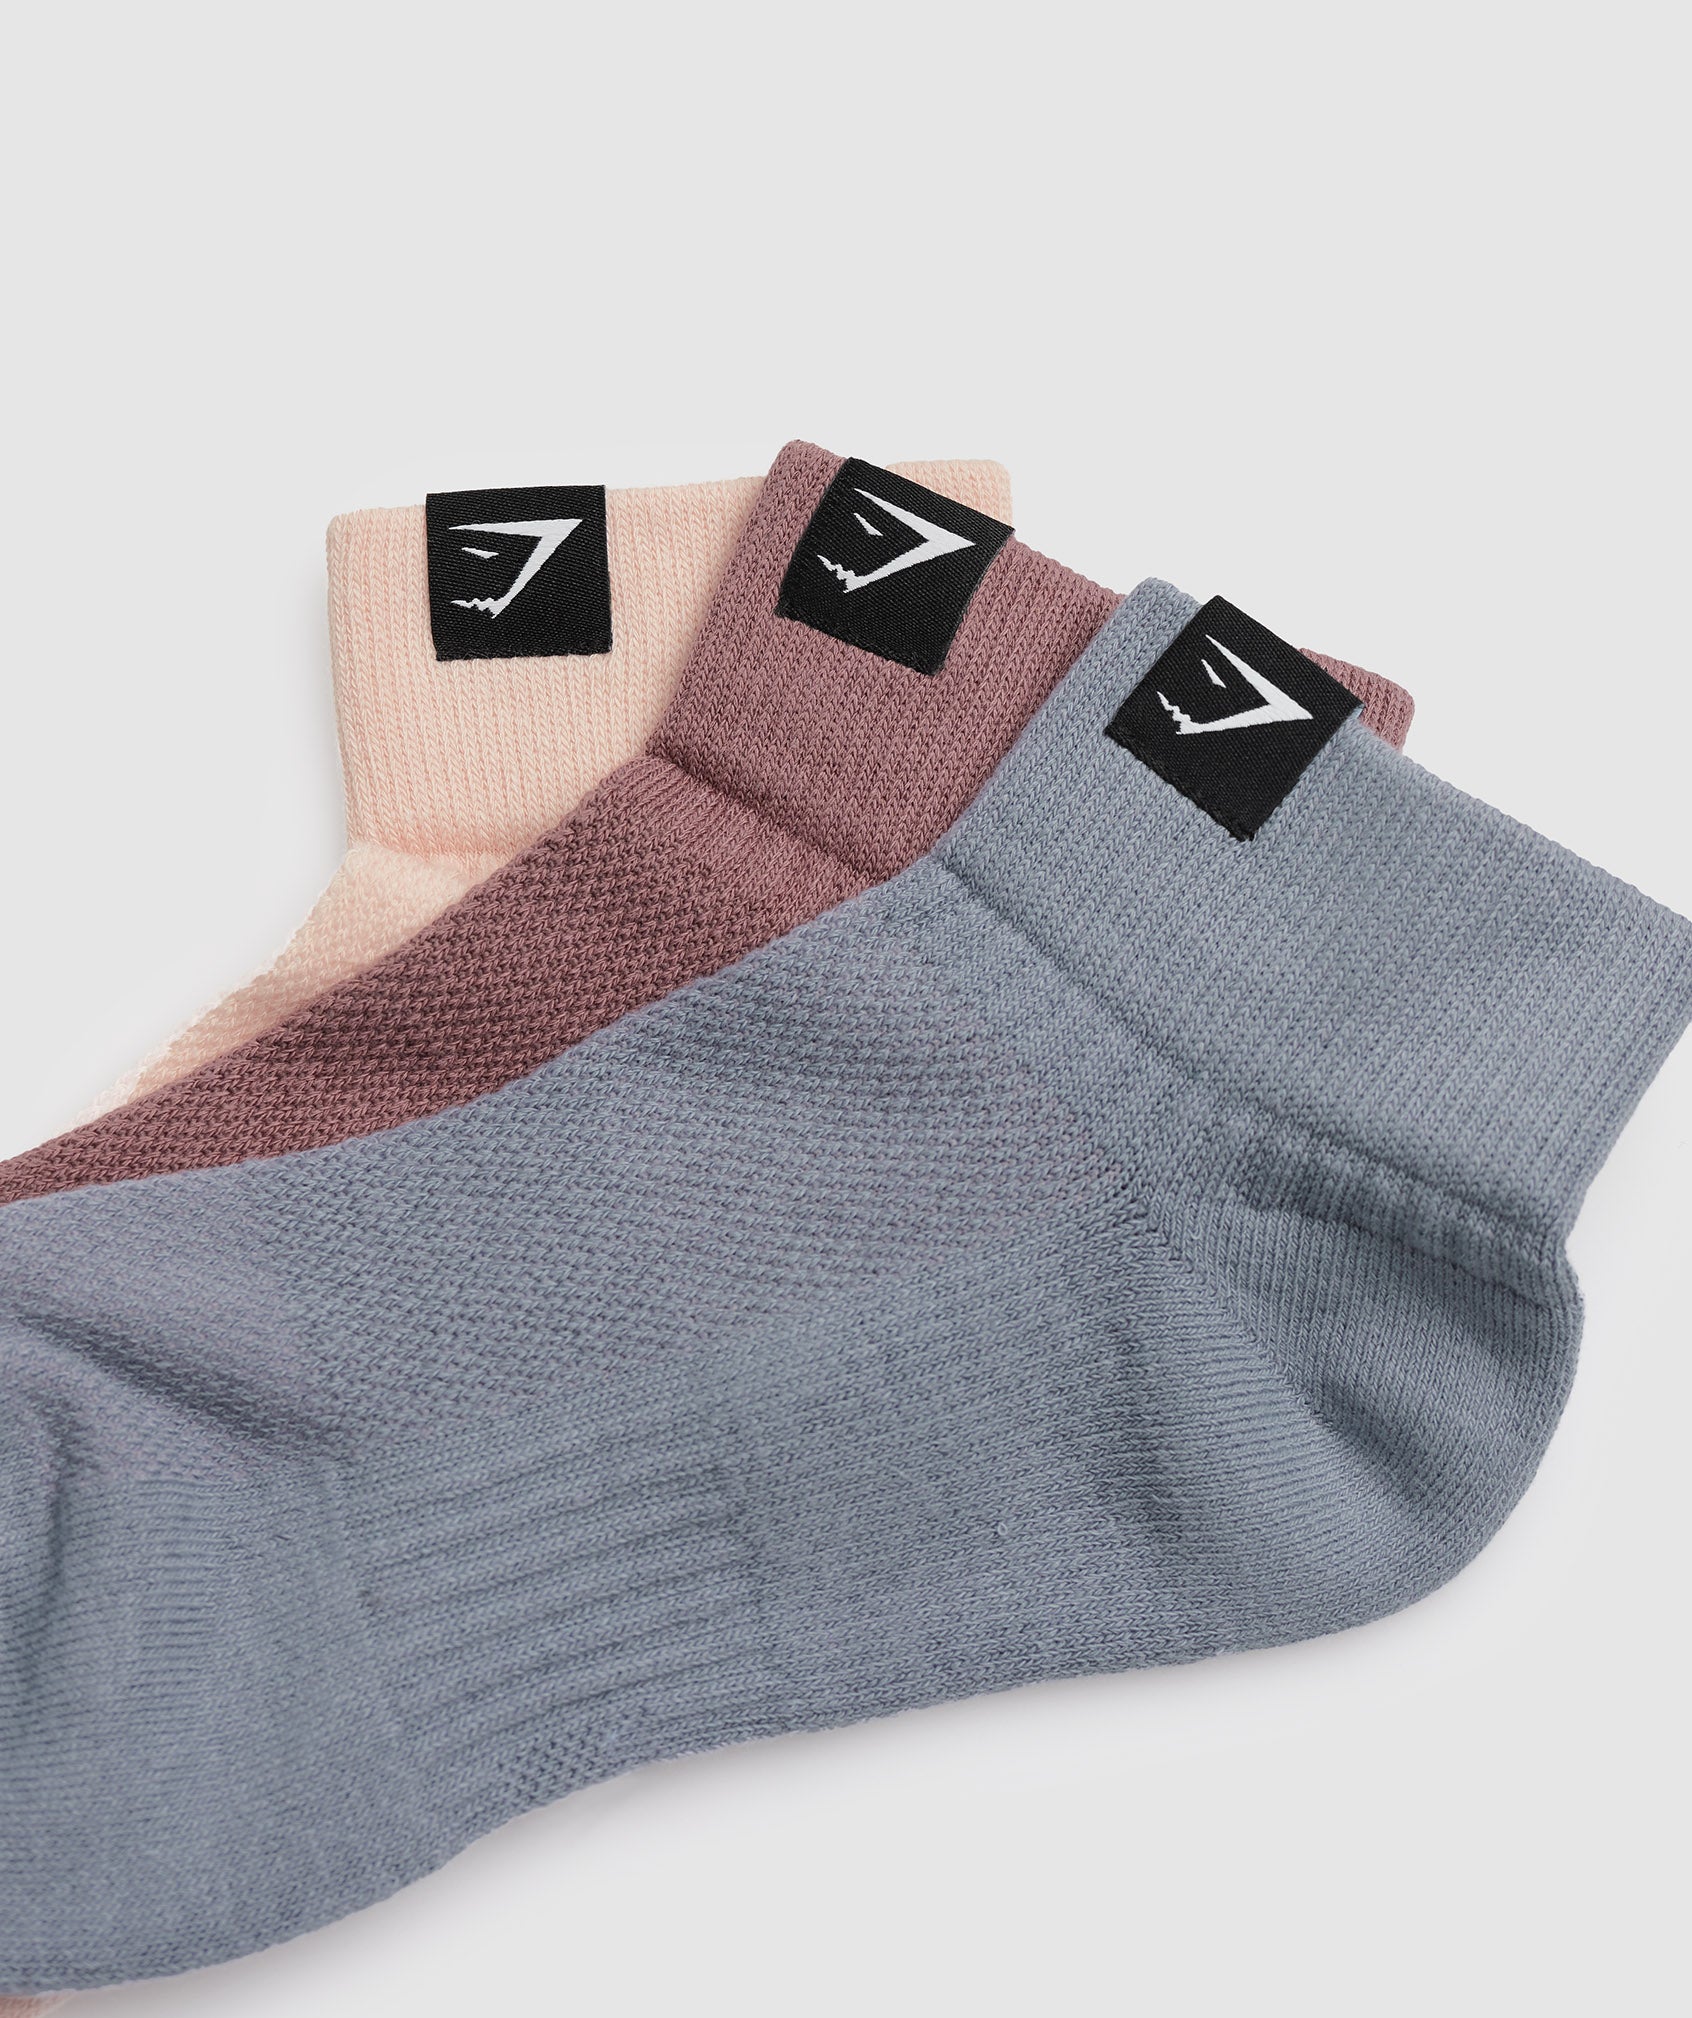 Woven Tab Quarter Socks 3pk in Misty Pink/Drift Grey/Maroon - view 2